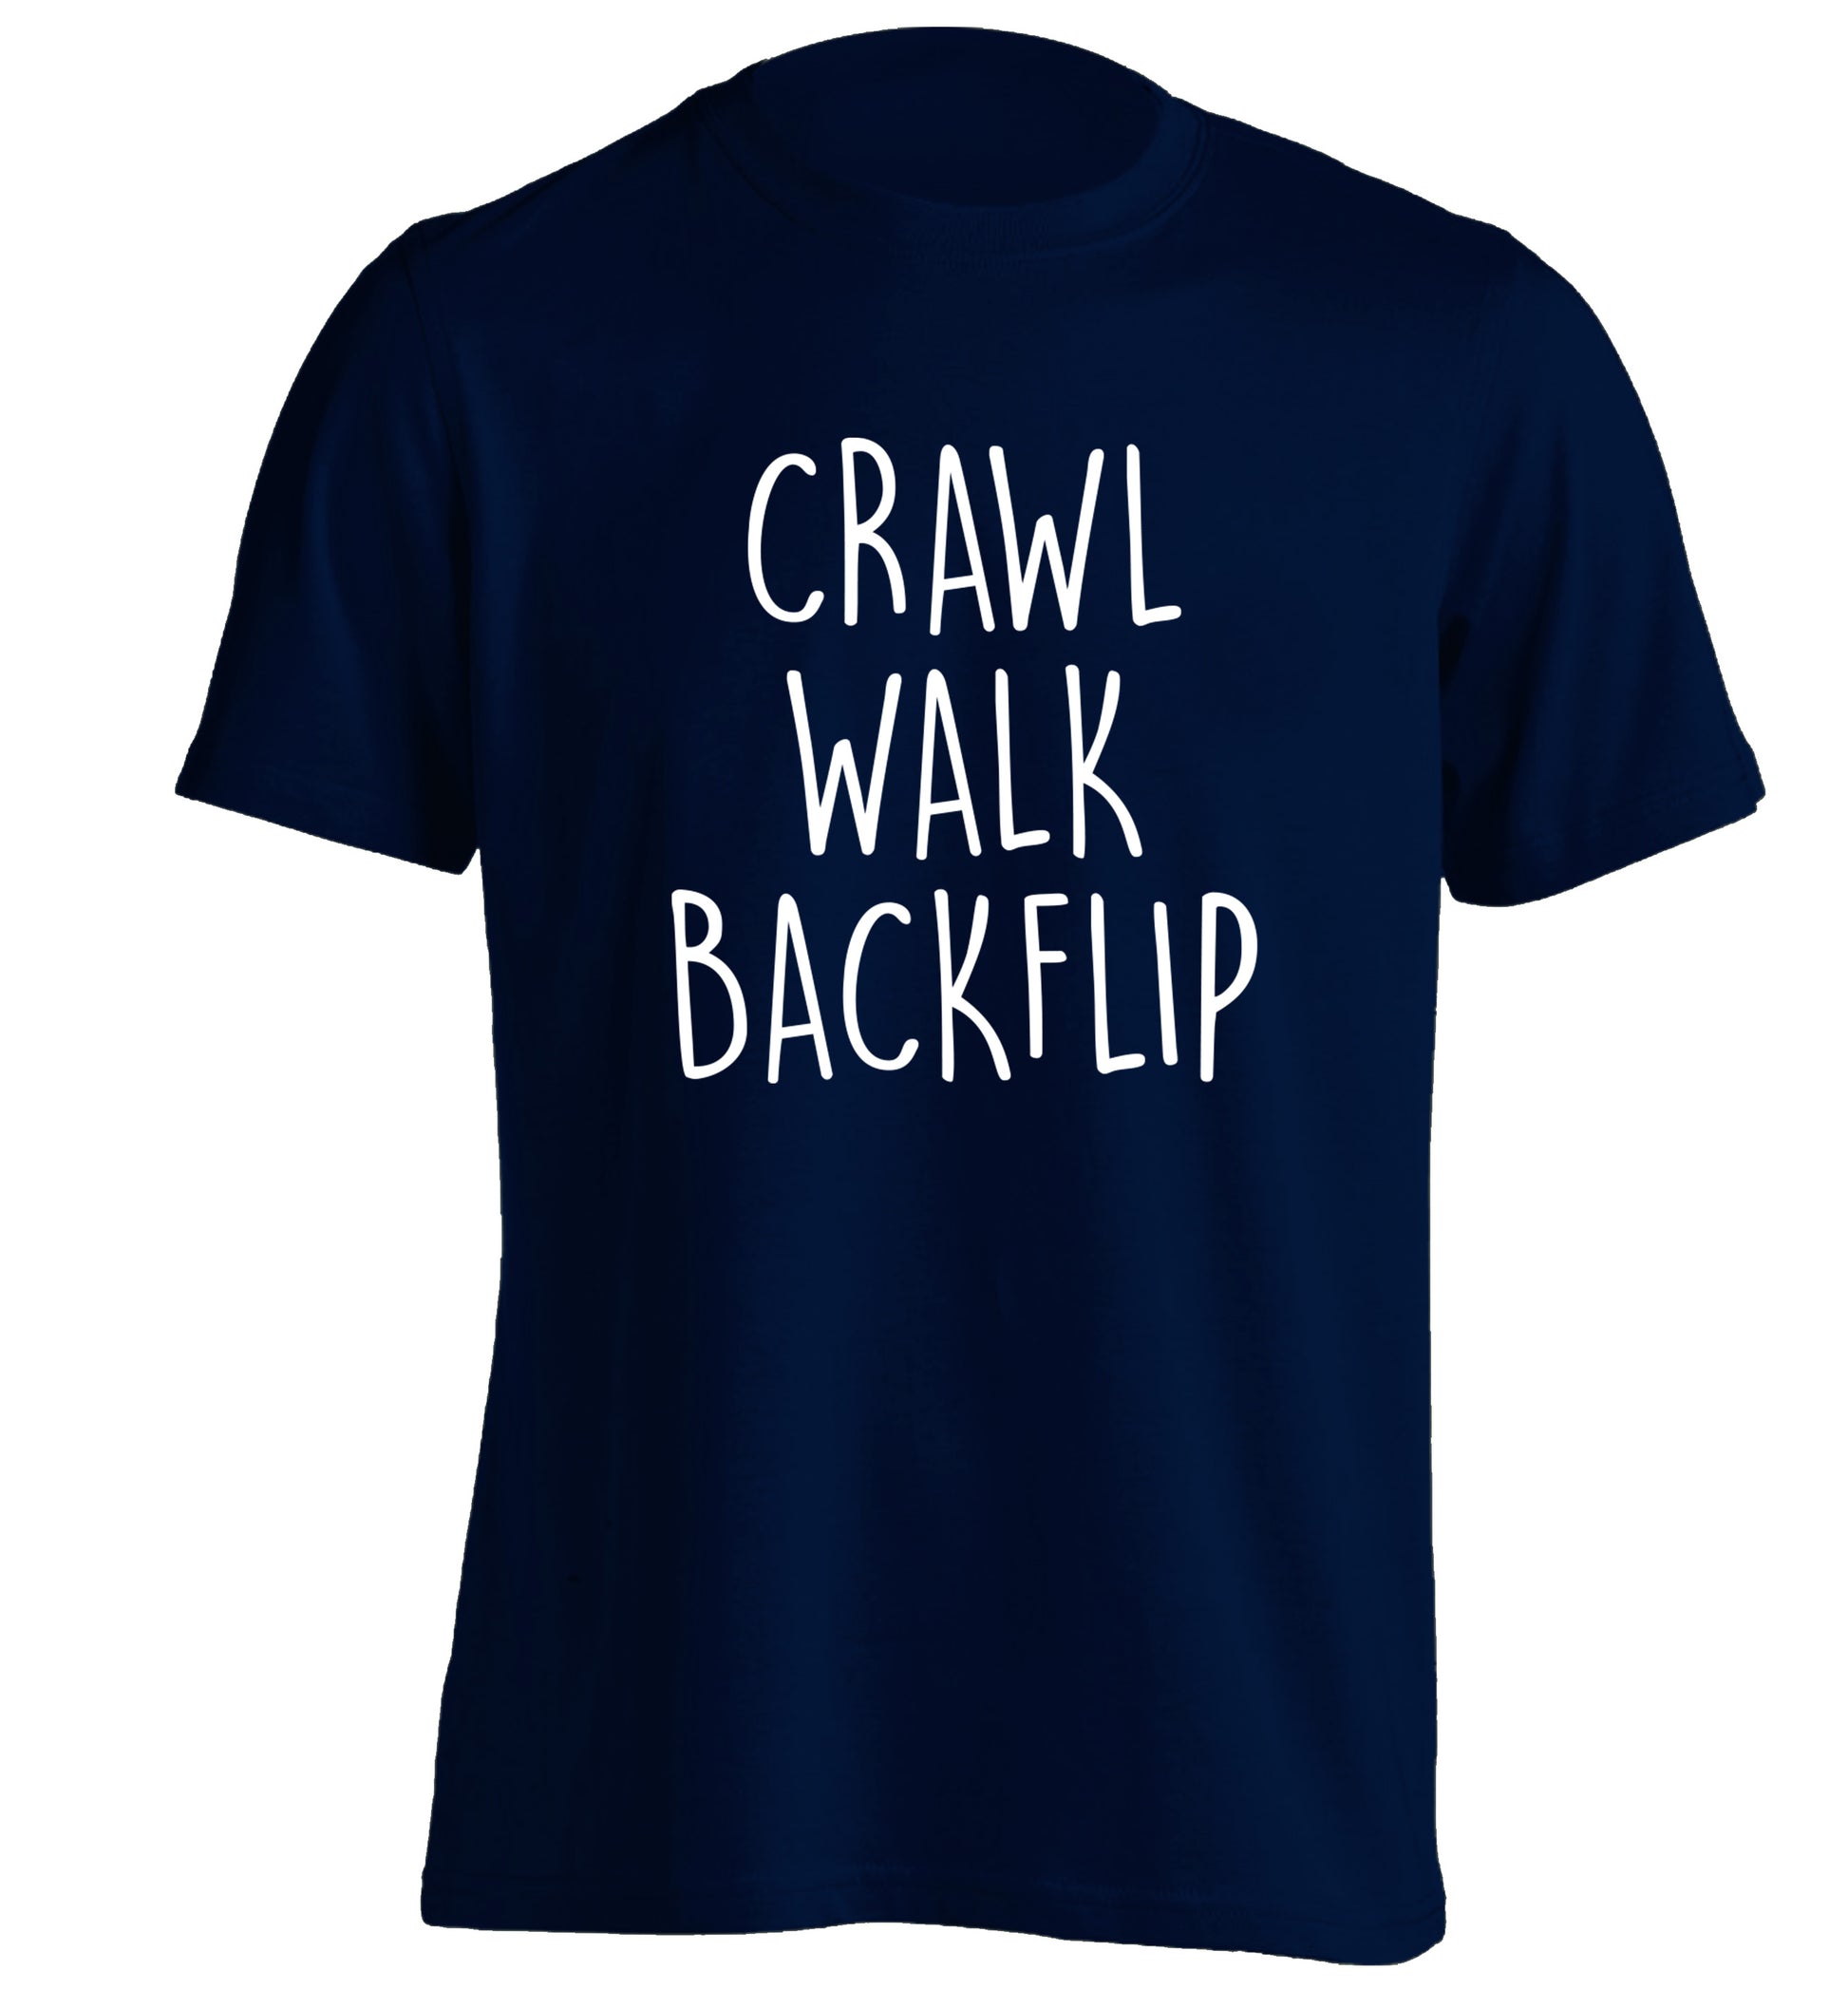 Crawl Walk Backflip adults unisex navy Tshirt 2XL